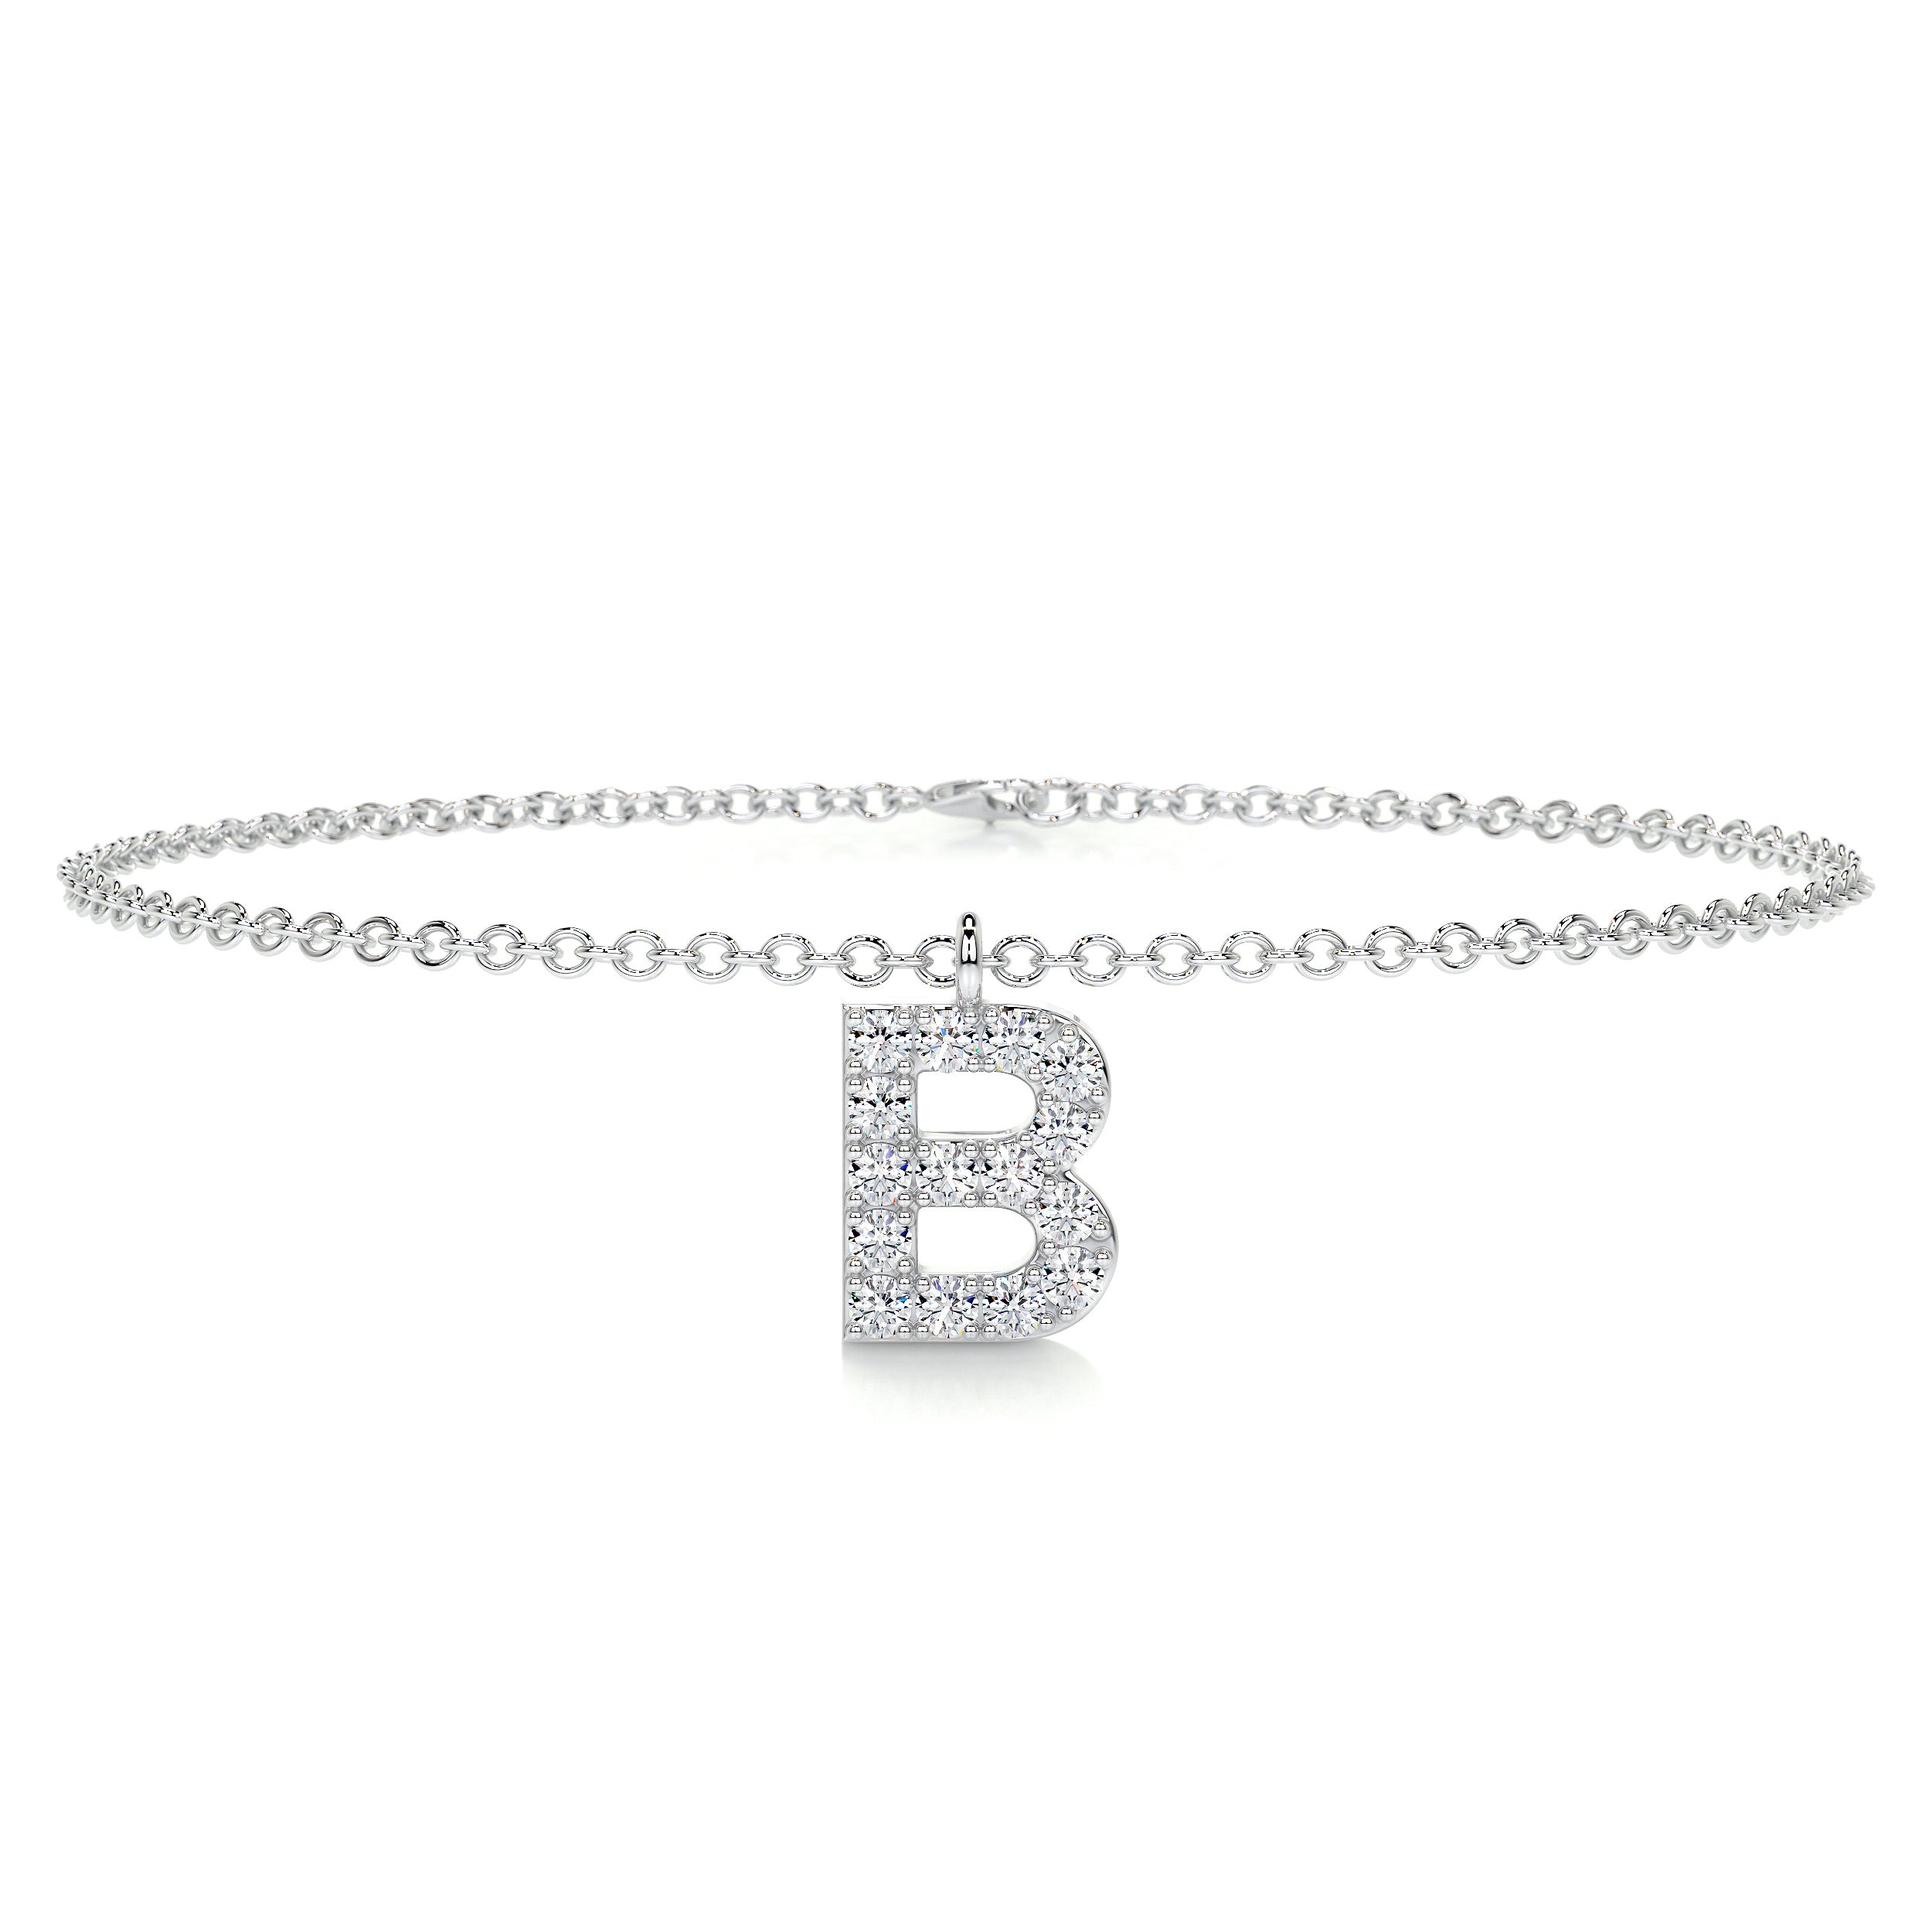 Barbara Letter Diamonds Bracelet   (0.15 Carat) -14K White Gold